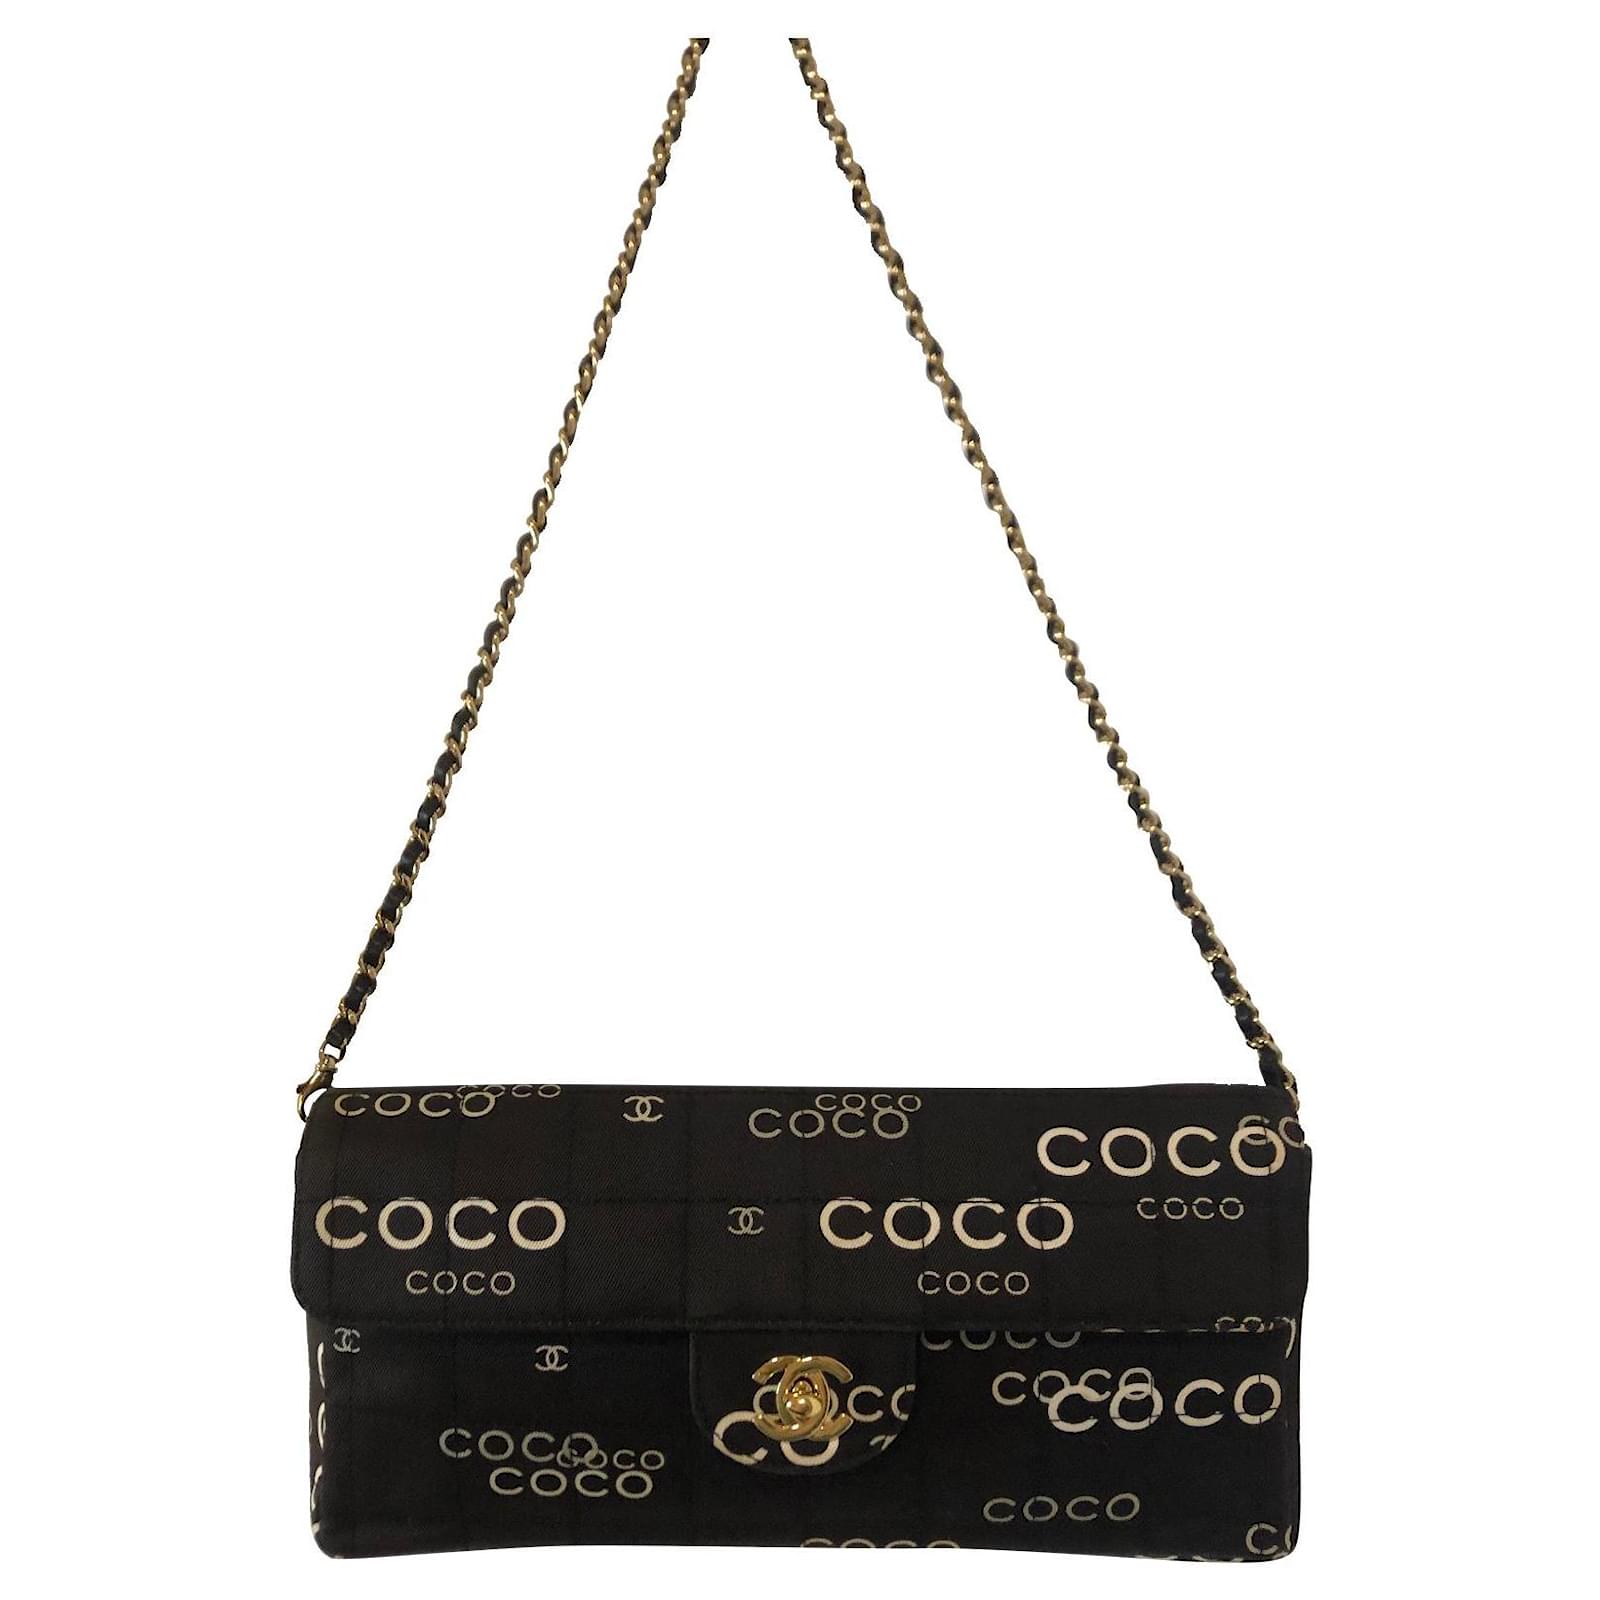 CHANEL Chocolate Bar Leather Handbag Beige